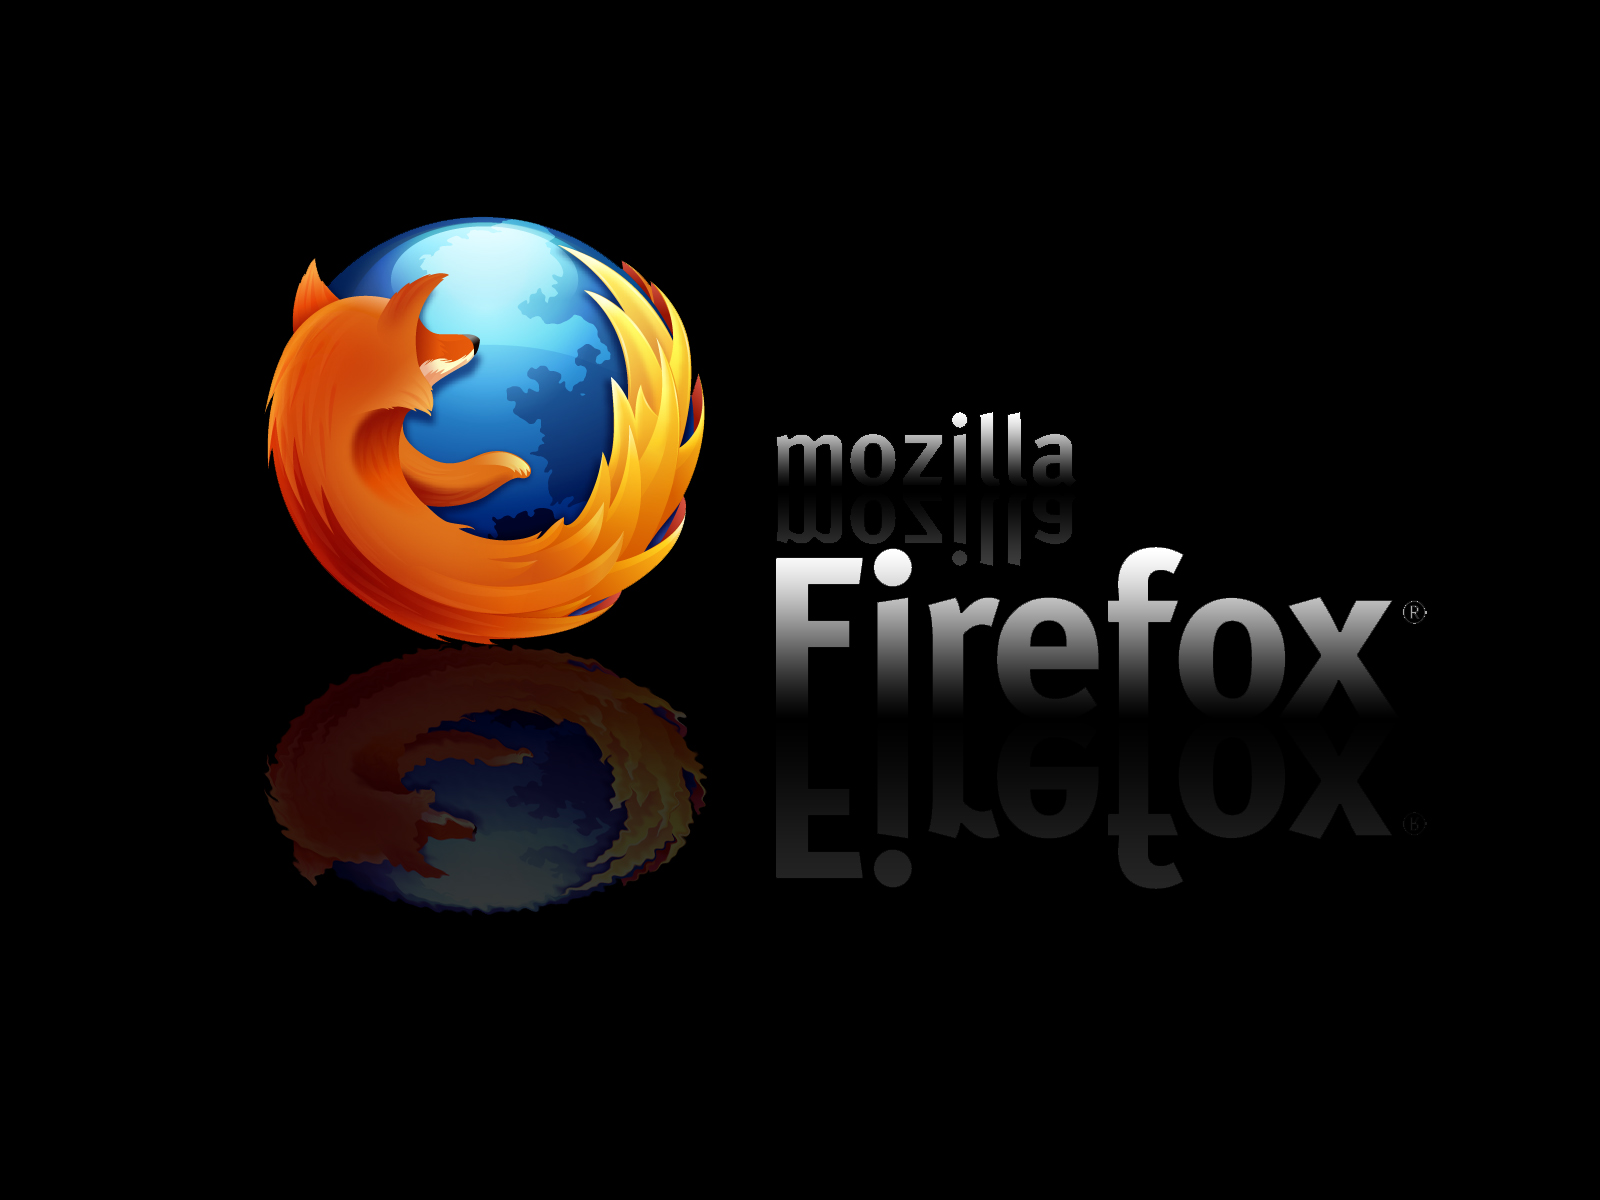 download mozilla firefox 2.0 free